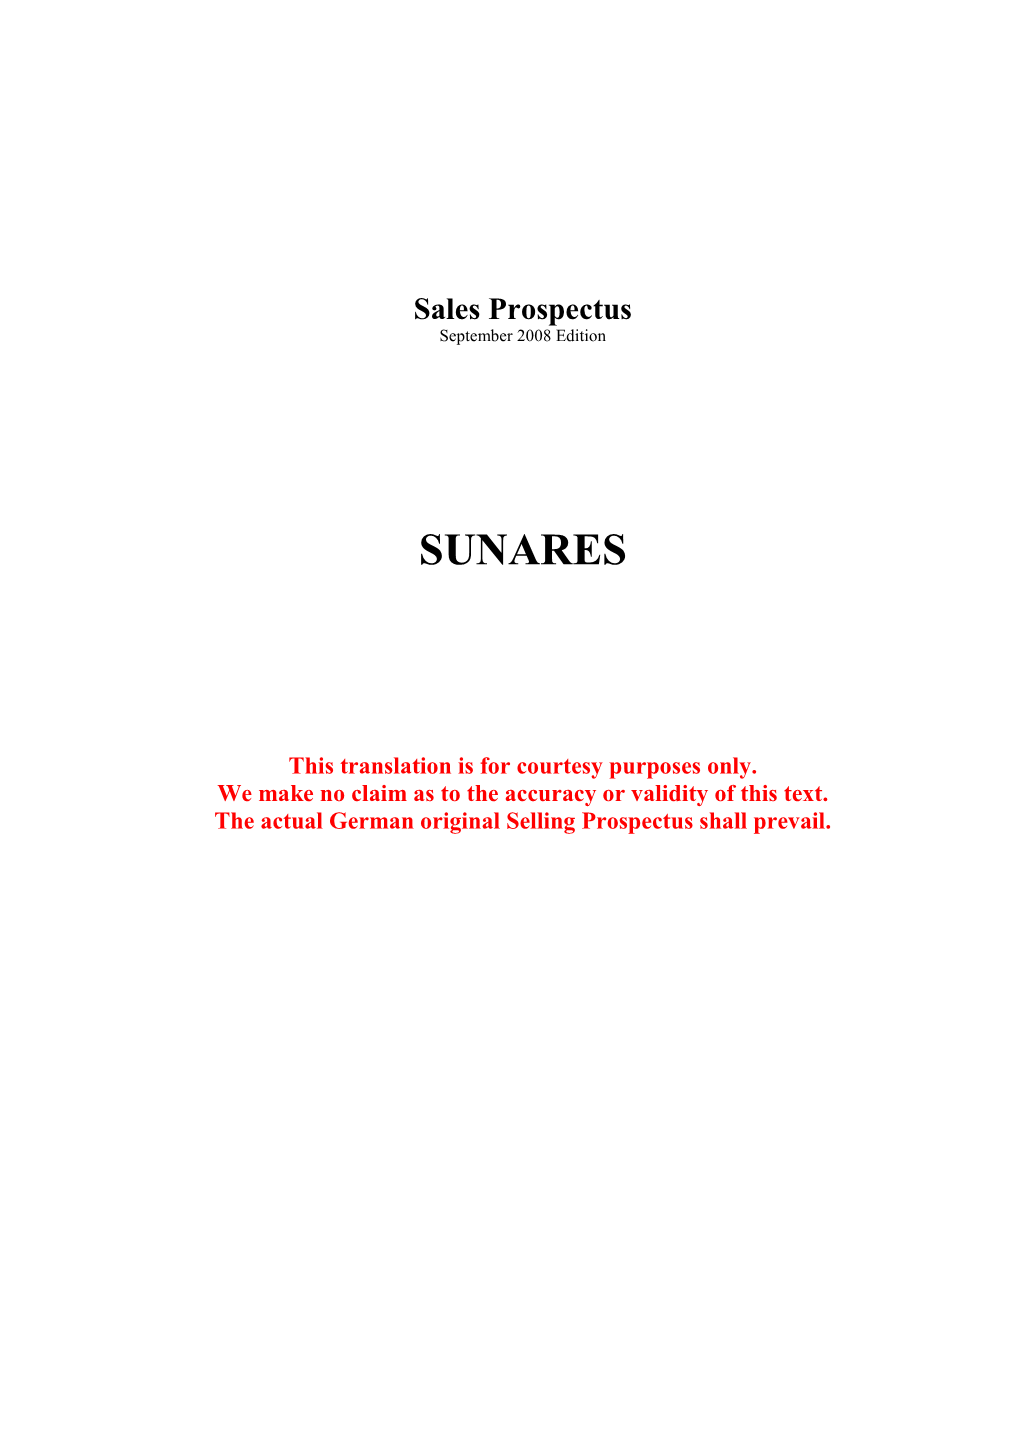 Sales Prospectus September 2008 Edition